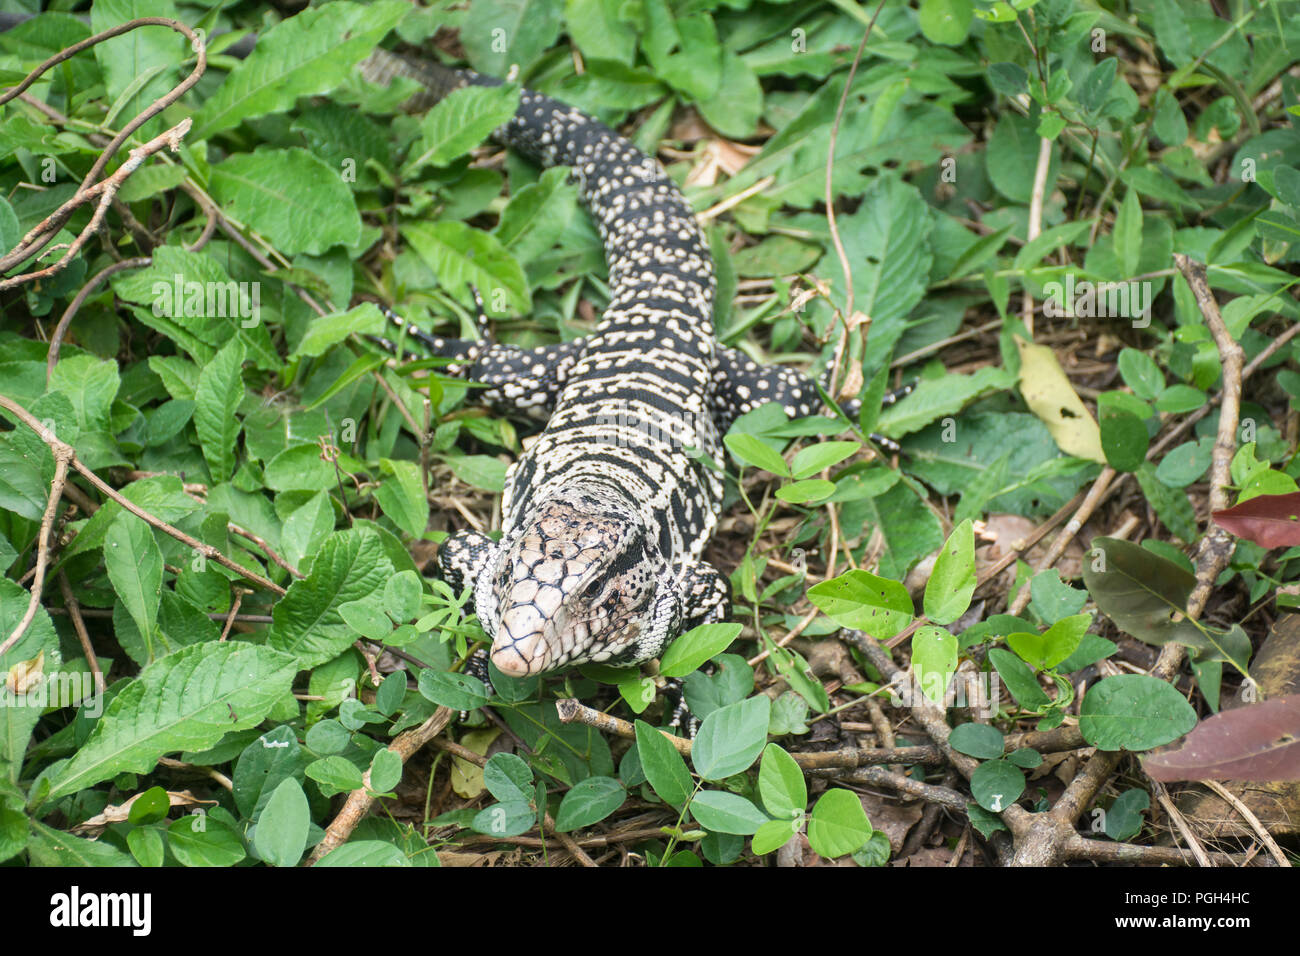 Argentine black and white tegu lizard (Salvator merianae), Iguazu National Park, Misiones, Argentina Stock Photo